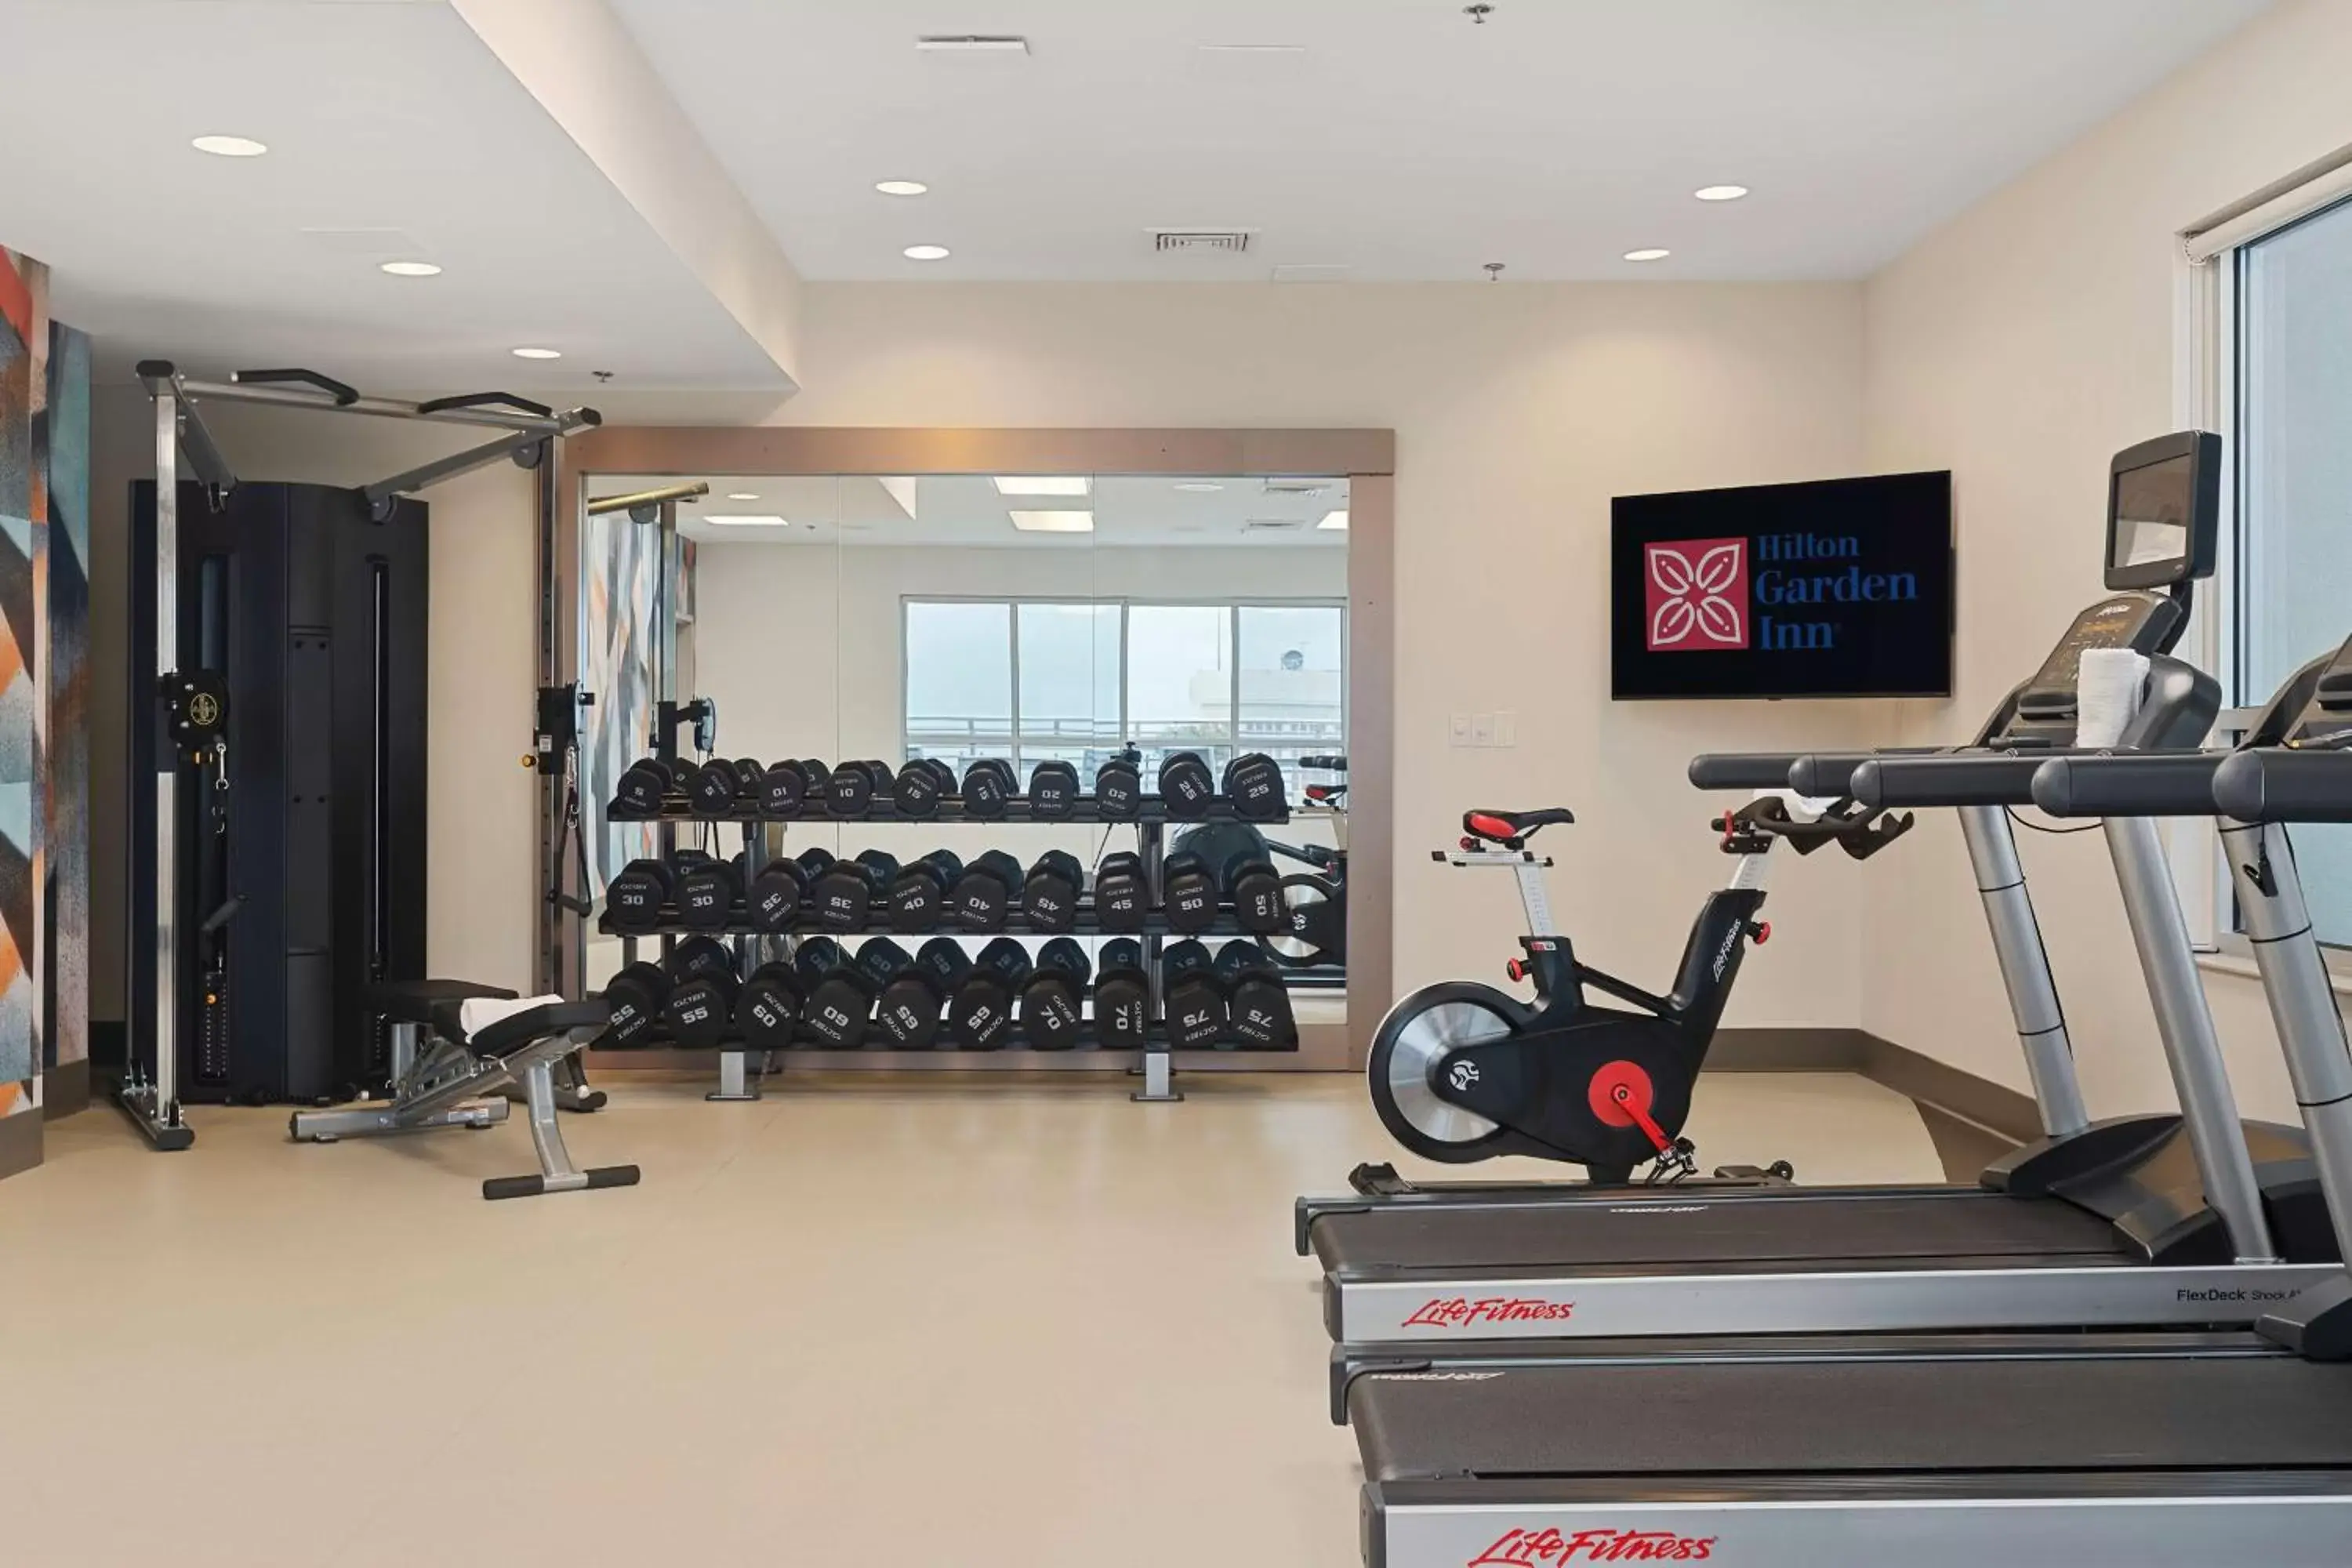 Fitness centre/facilities, Fitness Center/Facilities in Hilton Garden Inn New Orleans French Quarter/CBD